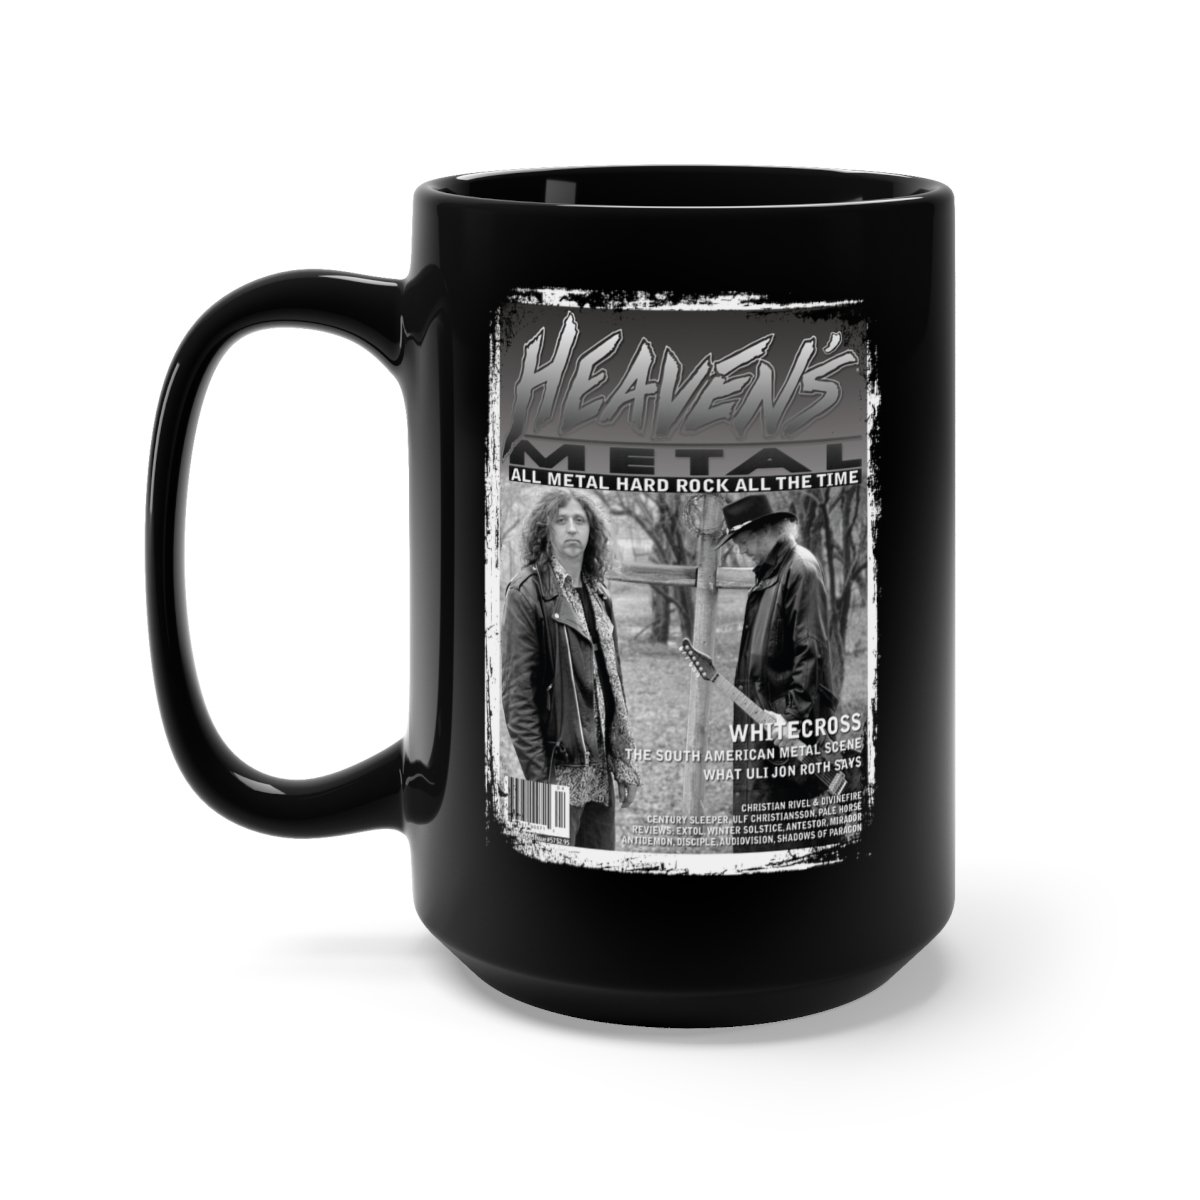 Heaven’s Metal Magazine Issue 57 Whitecross Black Mug 15oz